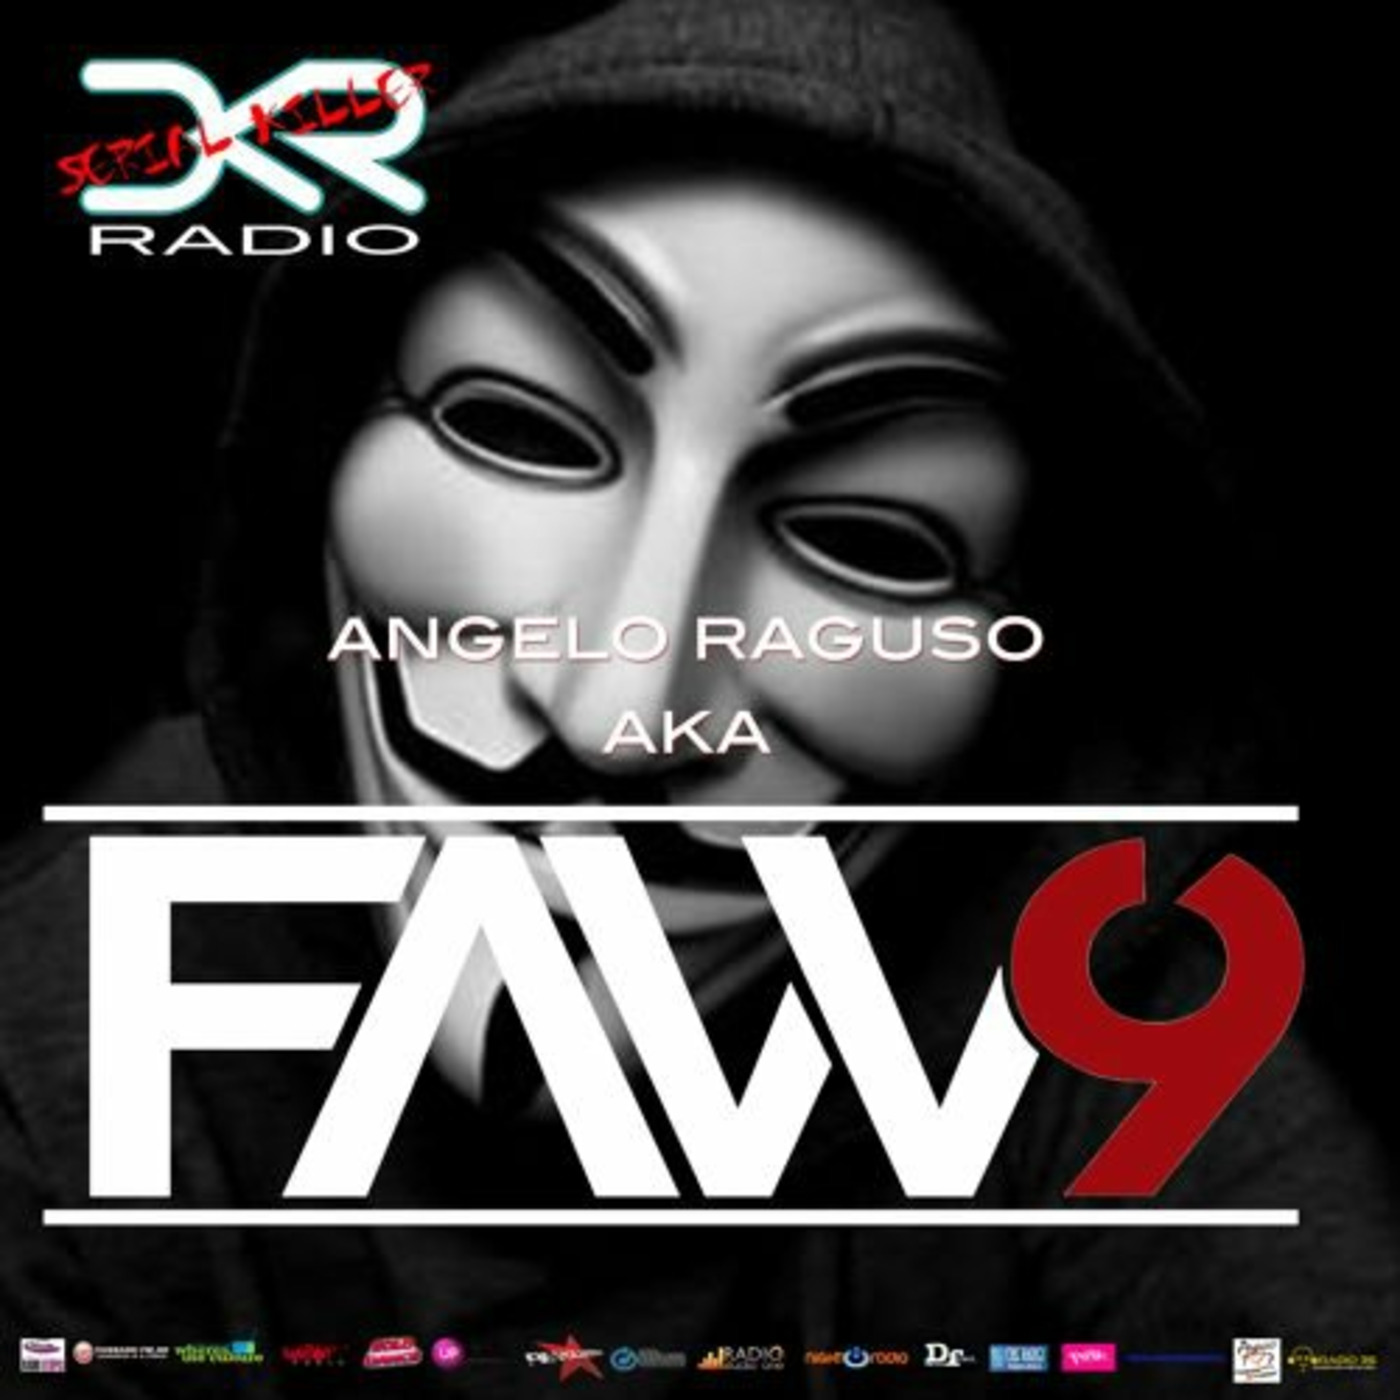 DKR Serial Killers Radio Show 85 (Angelo Raguso aka FAW9 Guest Mix)